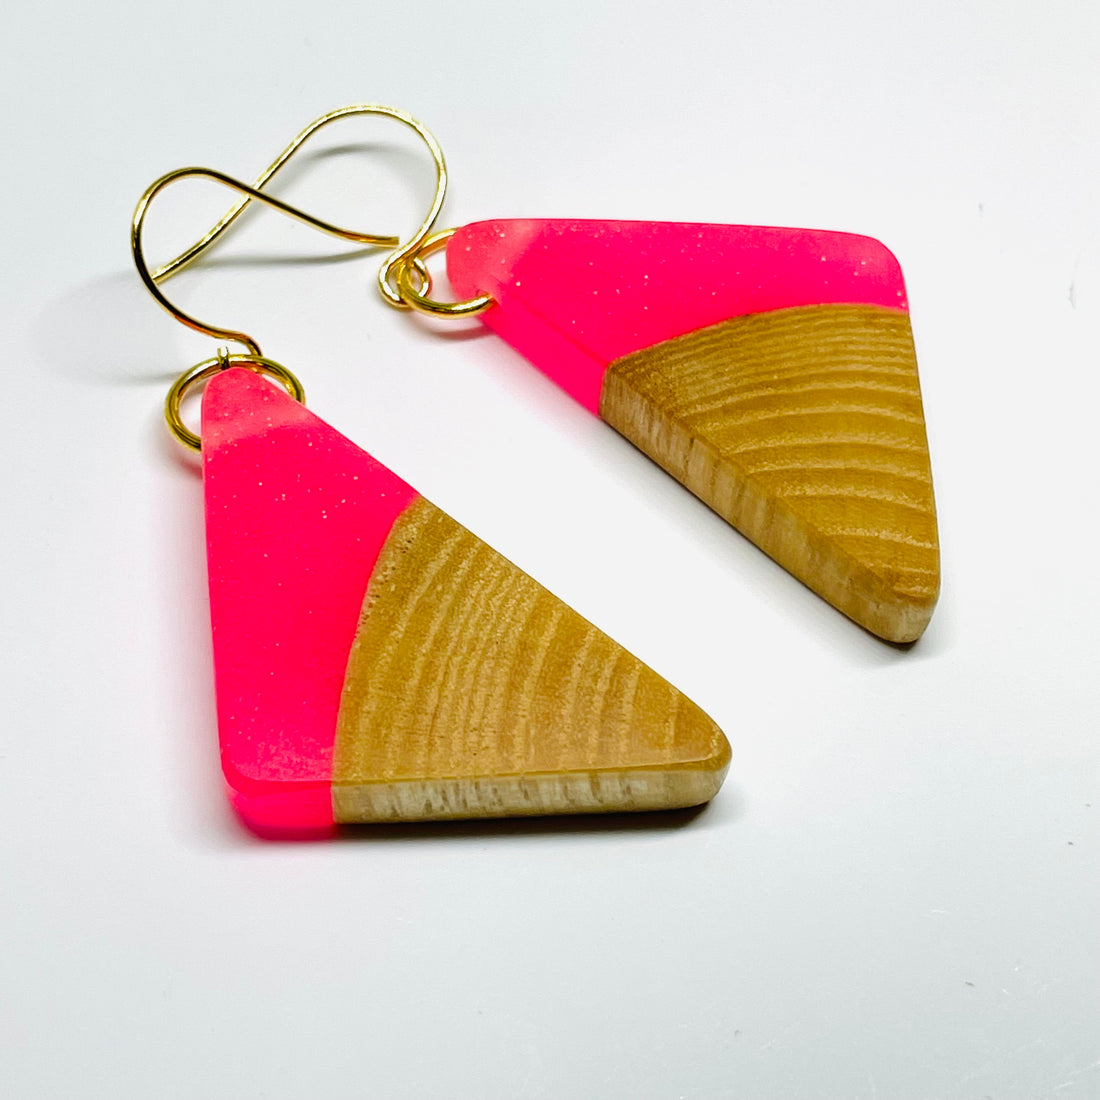 handmade jewelry, Minnesota local wood and resin artist. Pink resin with birch wood, nickel free dangle earrings triangle shaped